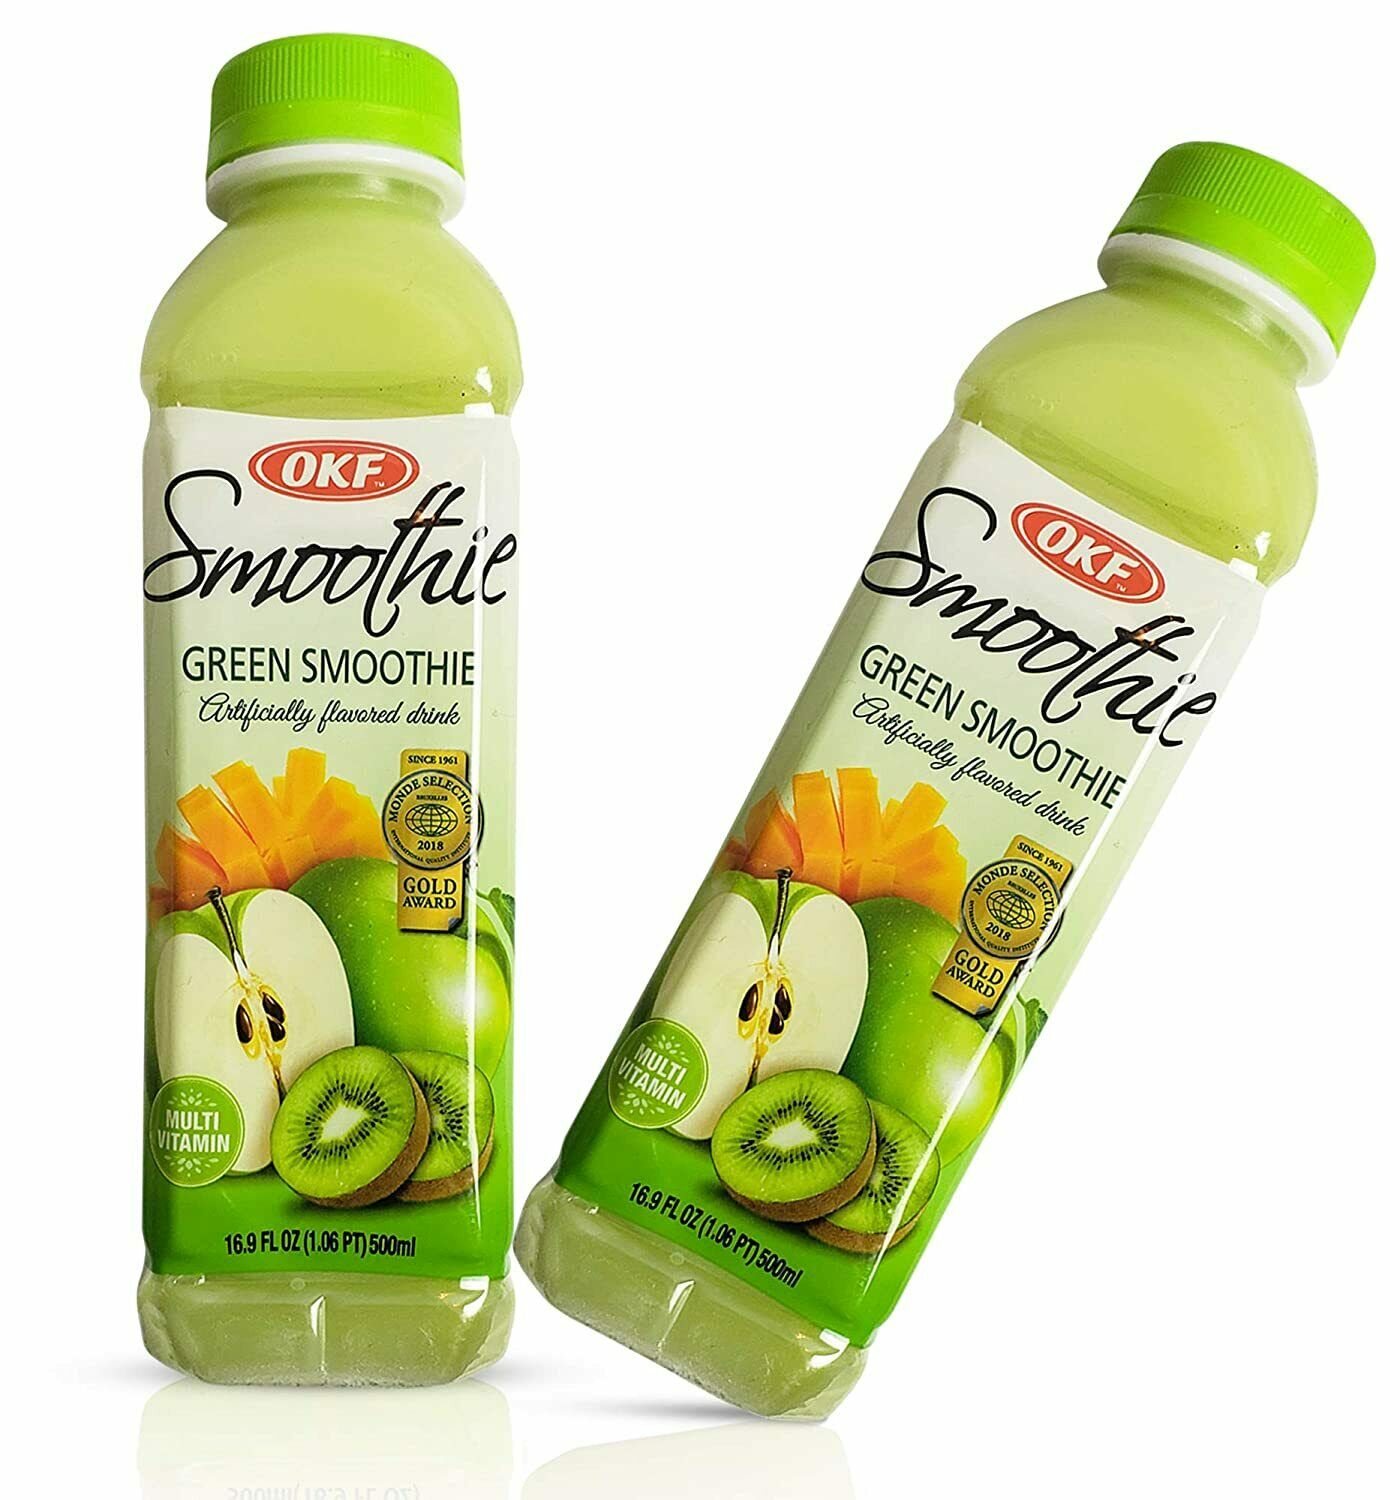 Okf Smoothie, Multi Vitamin Premium 16.9 Fluid Oz Green Smoothie 6 Pack